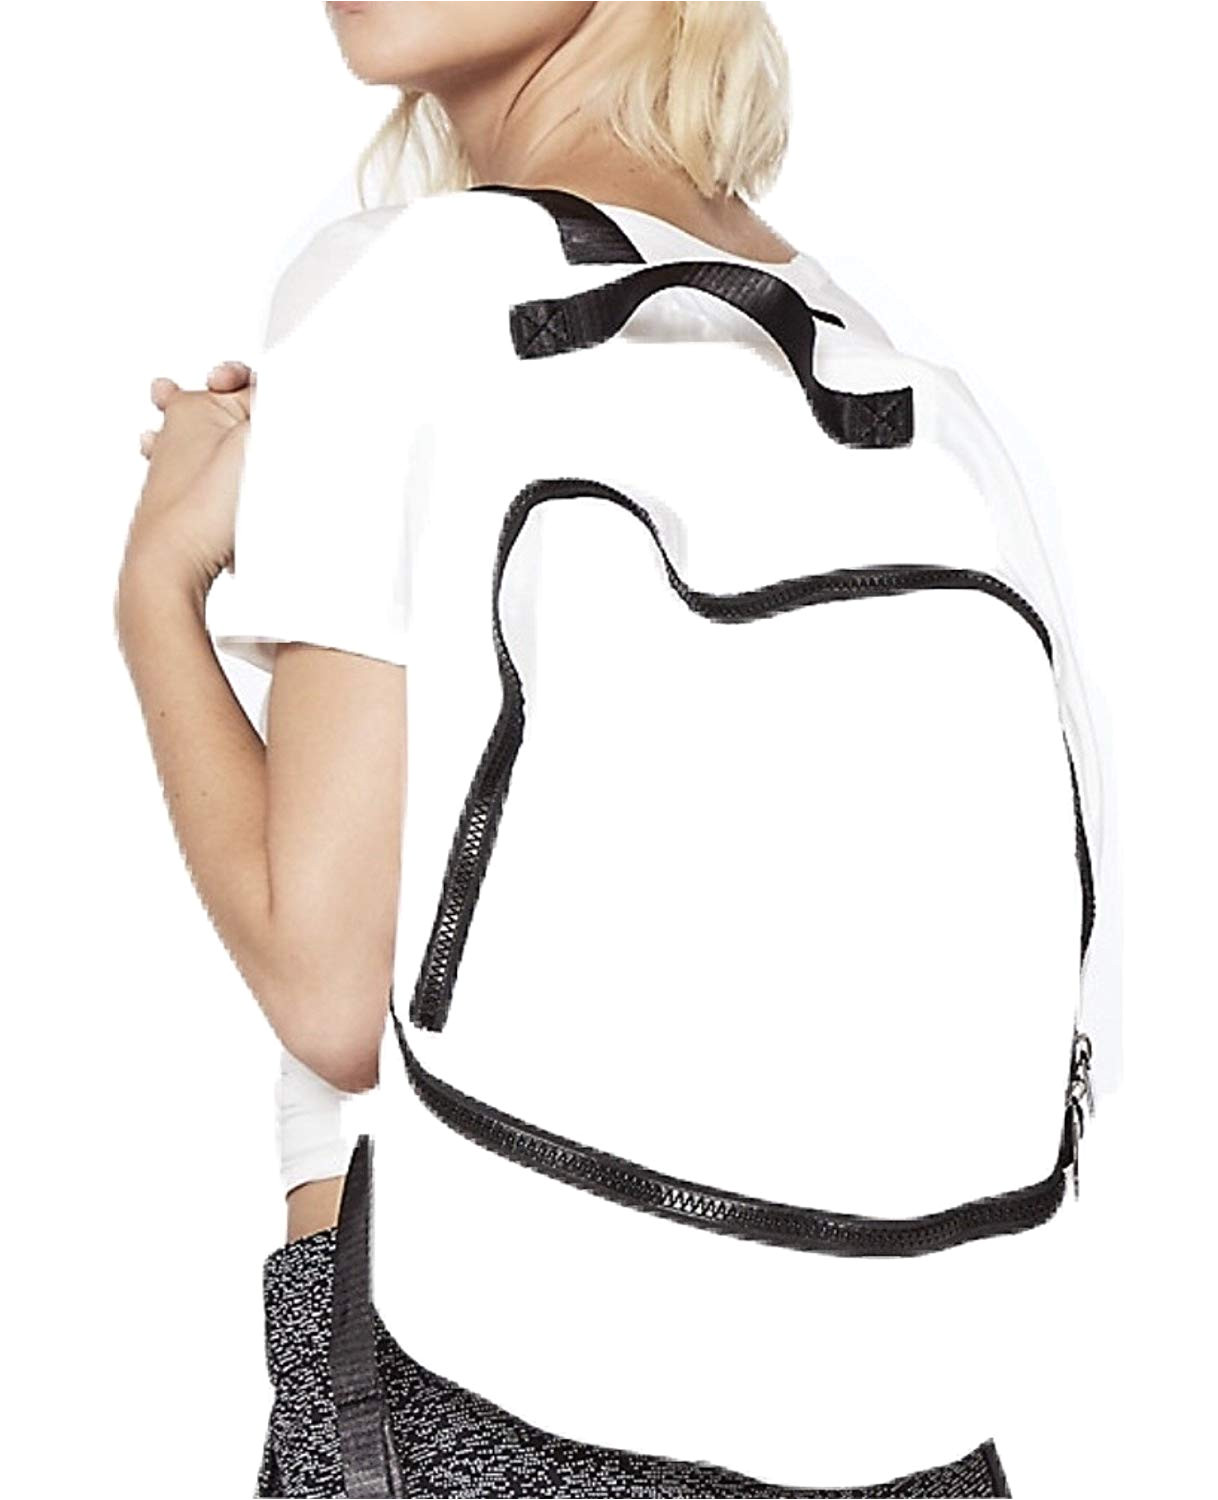 Lululemon Go Lightly Shoulder Bag Review Amazon Com Lululemon Go Lightly Backpack White Packable Womens Bag